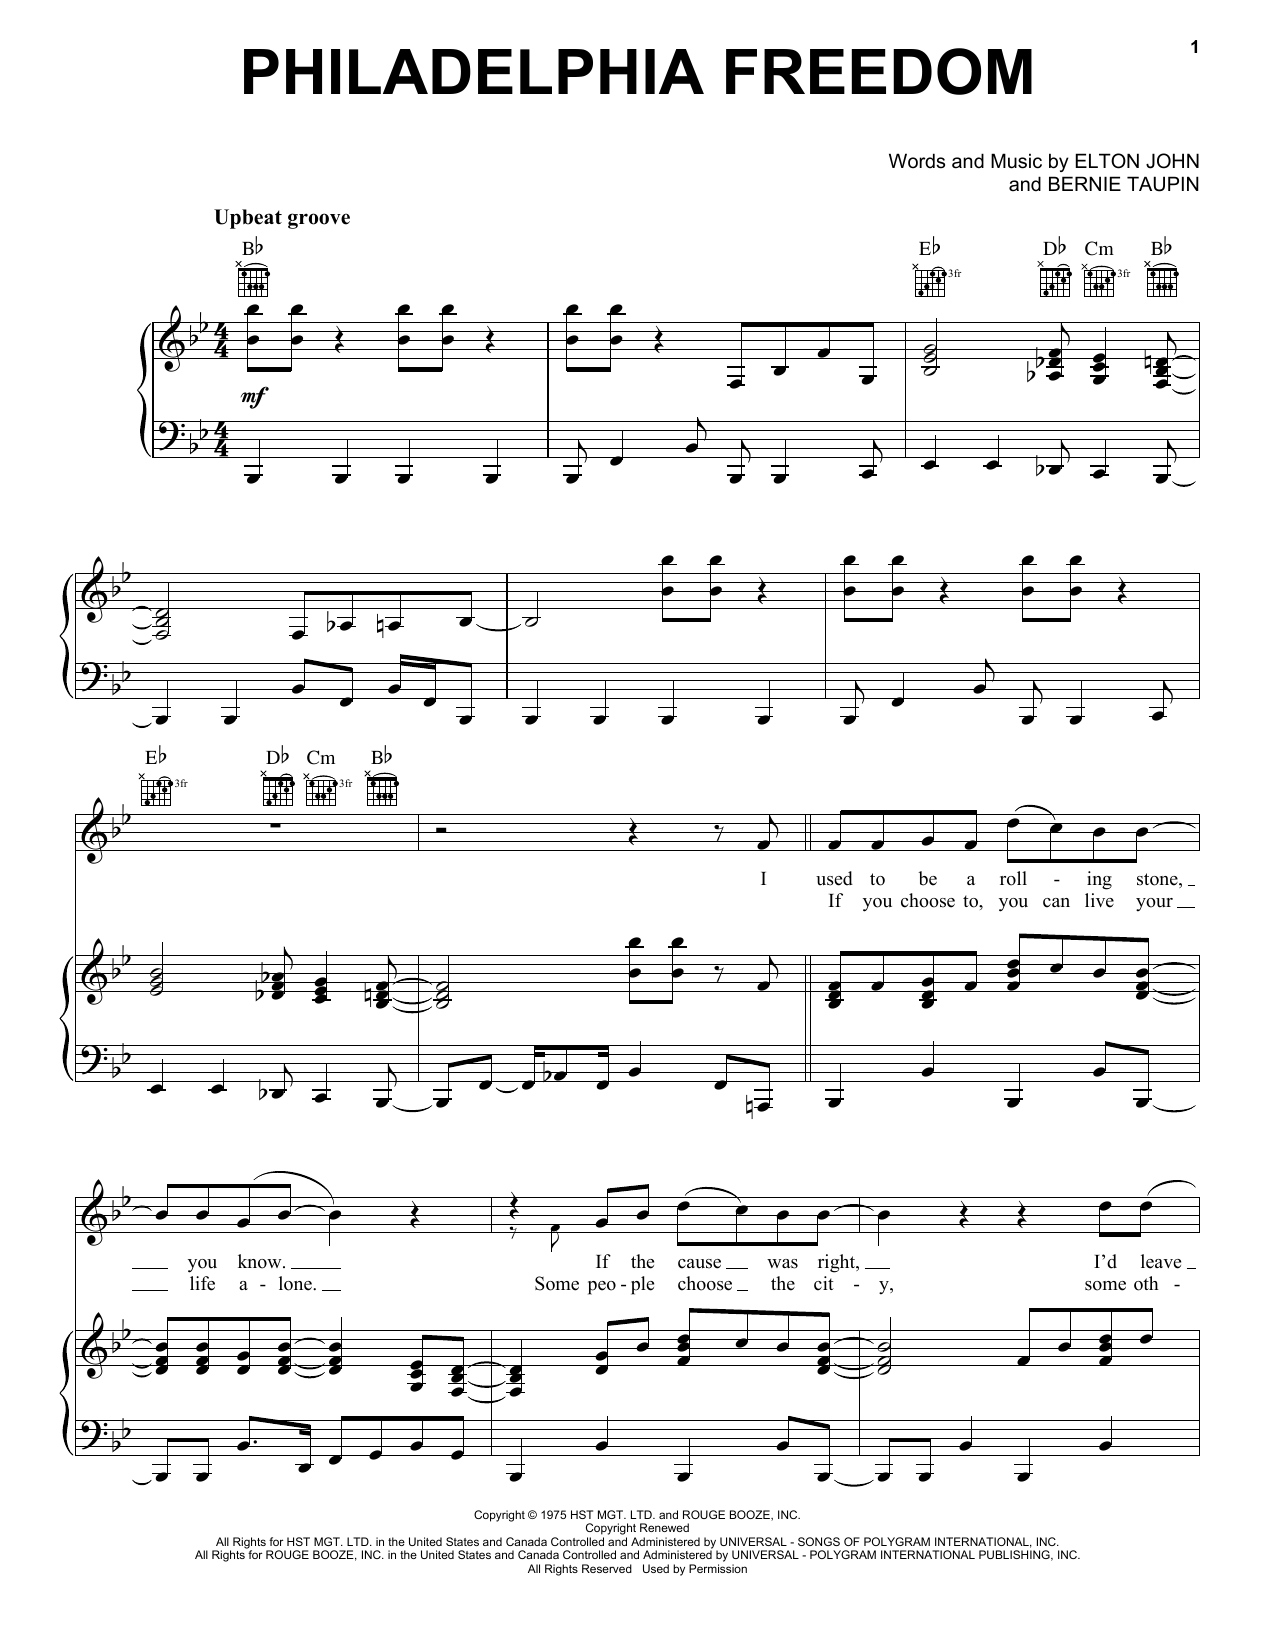 Elton John Philadelphia Freedom Sheet Music Notes & Chords for Piano, Vocal & Guitar - Download or Print PDF